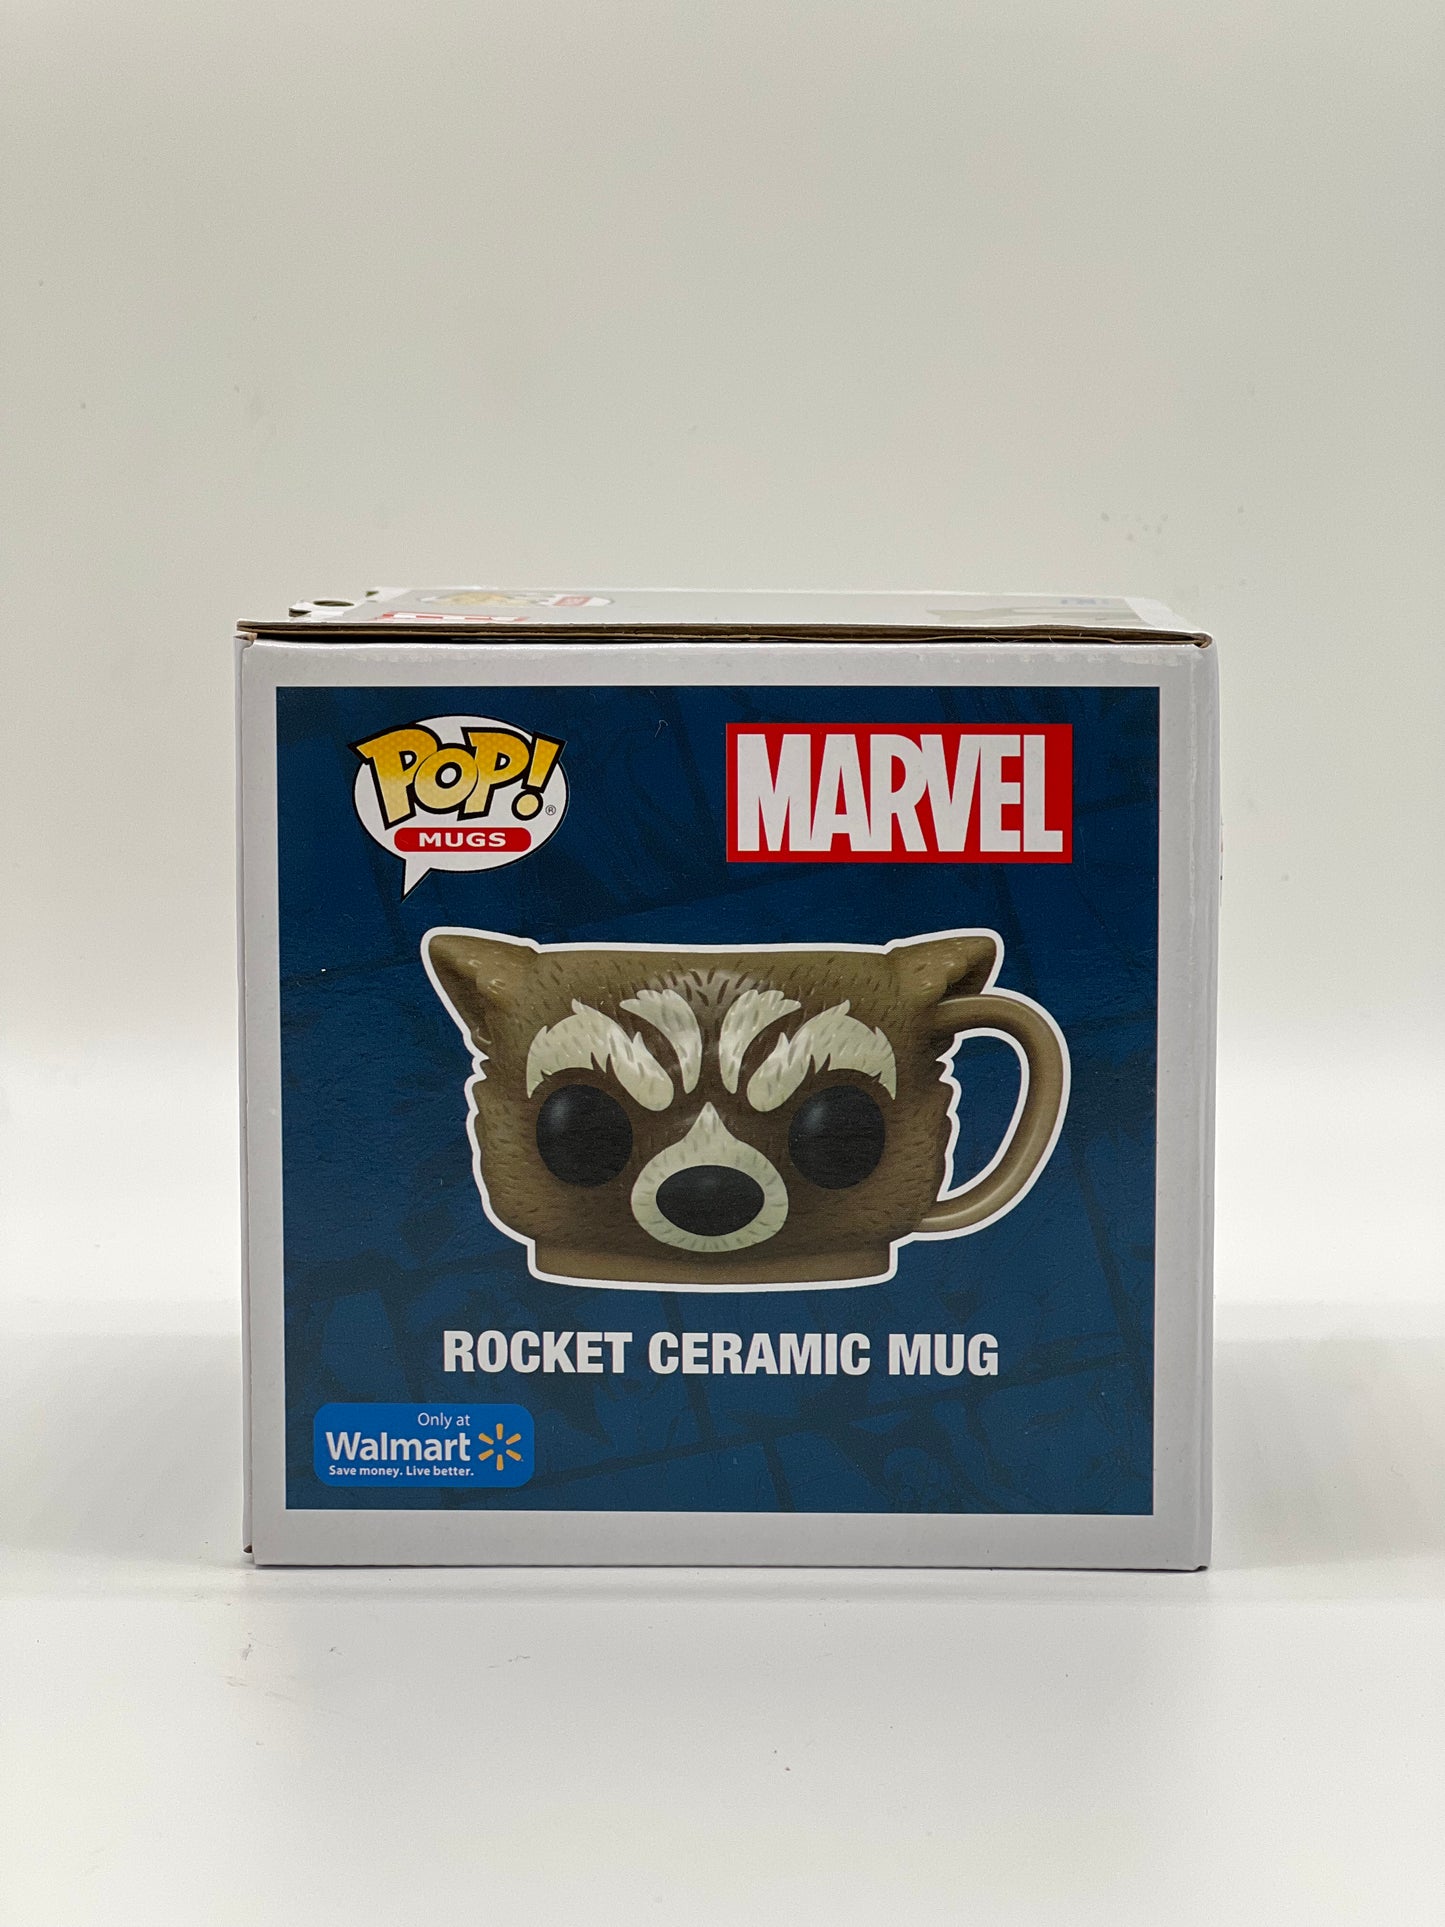 Pop! Mugs Marvel Rocket Ceramic Mug Walmart Exclusive